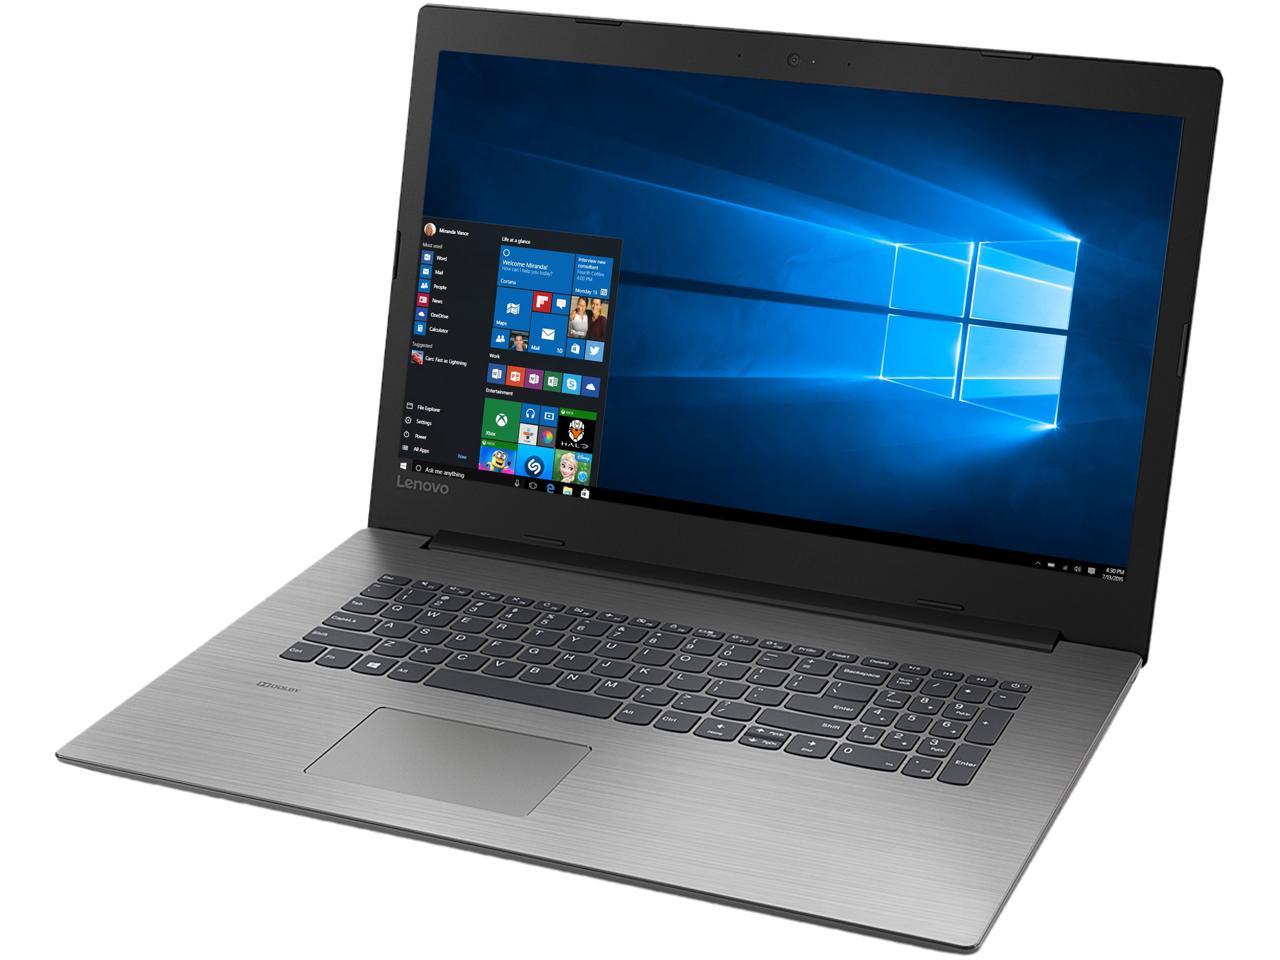 Lenovo Laptop IdeaPad 330-15IKBR 81DE01M2US Intel Core i5 8th Gen 8250U  (1.60 GHz) 8 GB Memory 1 TB HDD 16 GB Optane Memory Intel UHD Graphics 620  15.6" Windows 10 Home 64-Bit - Newegg.com